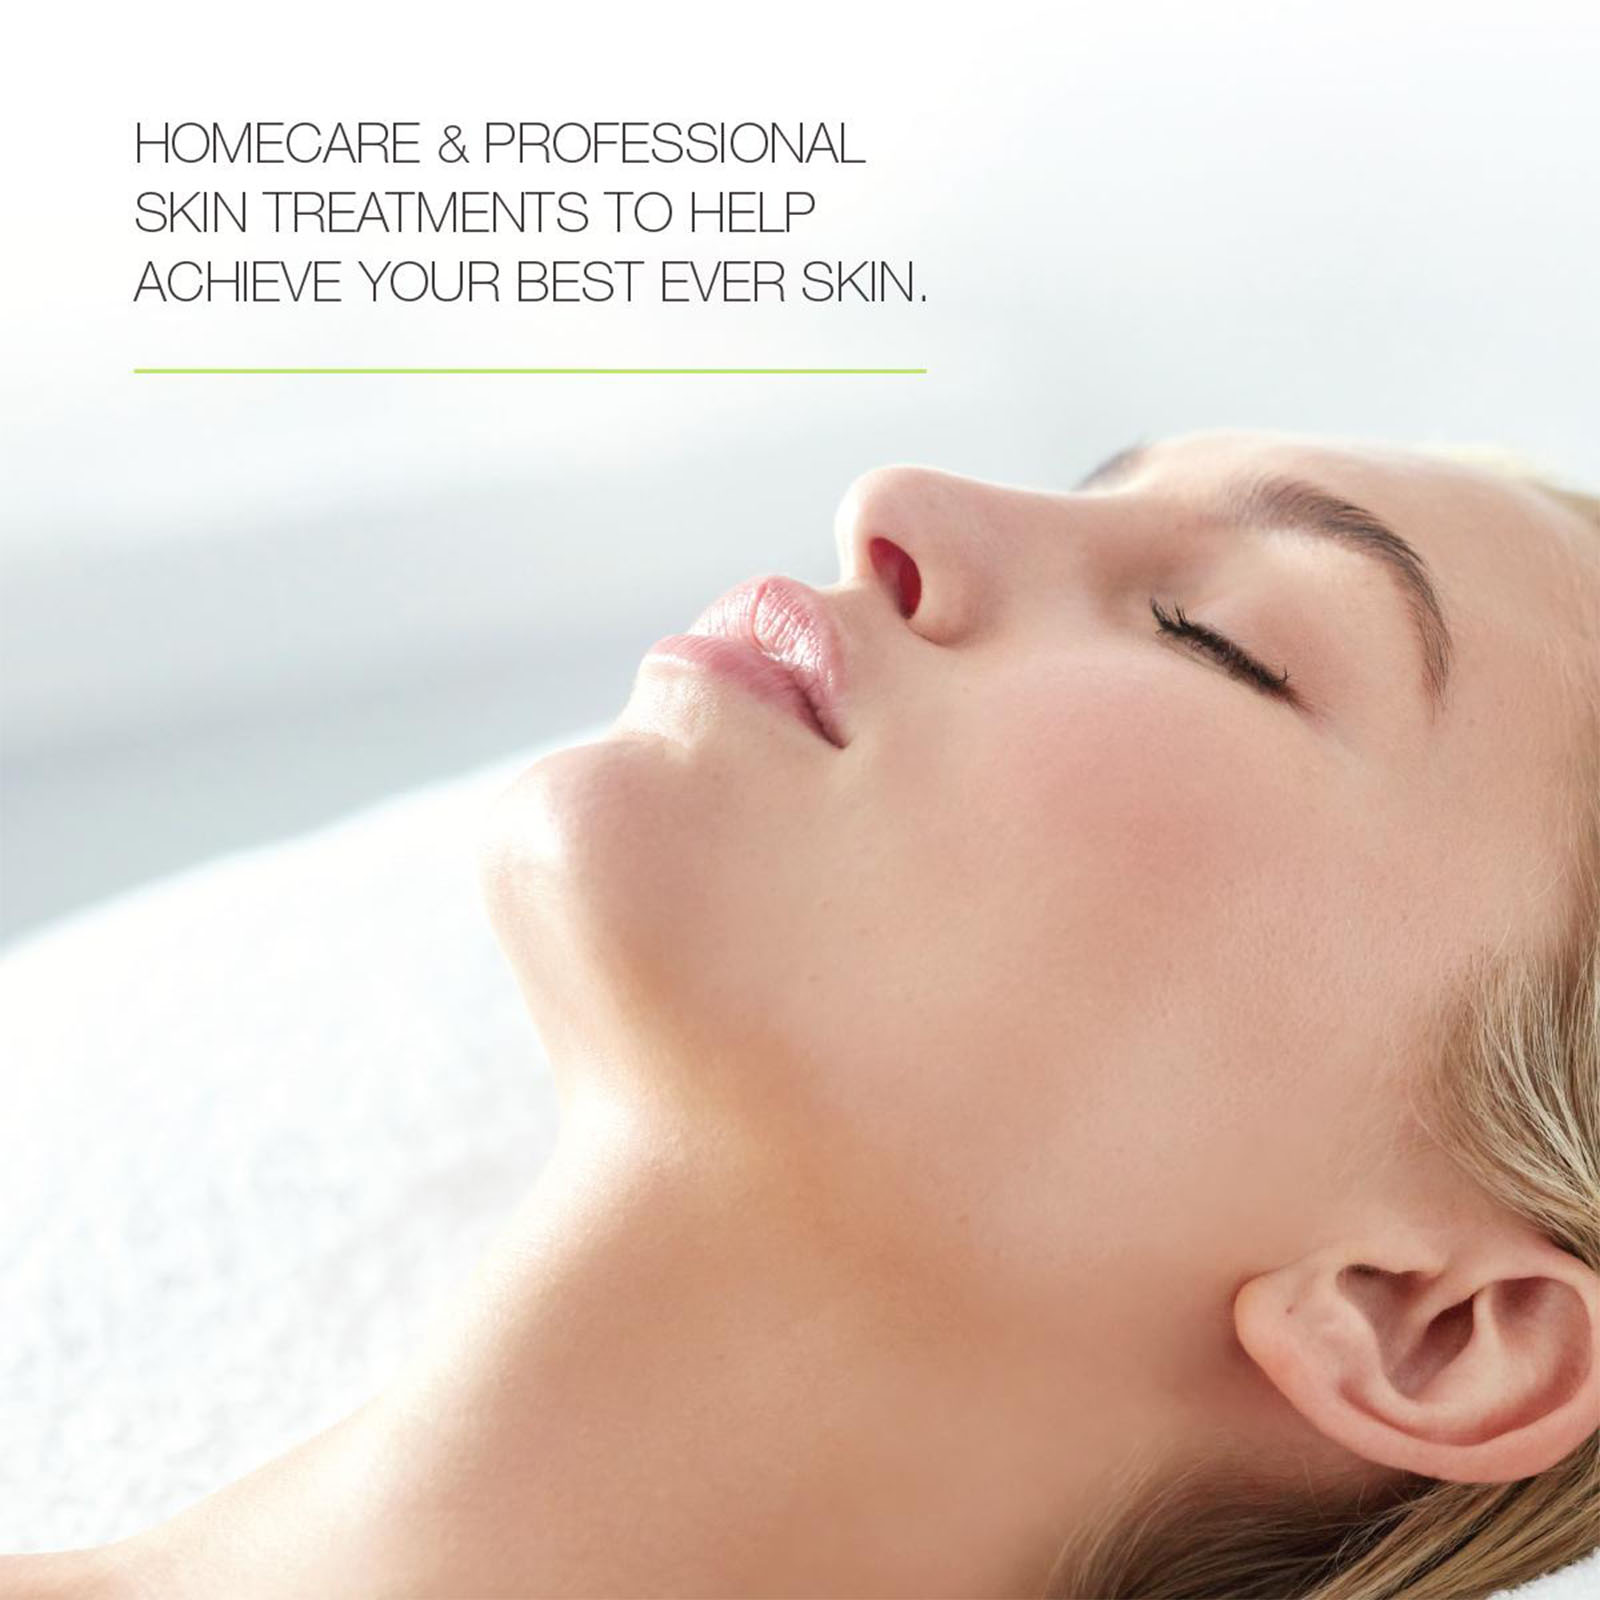 ultraceuticals_0002_Homecare & Professionsal skin treatments